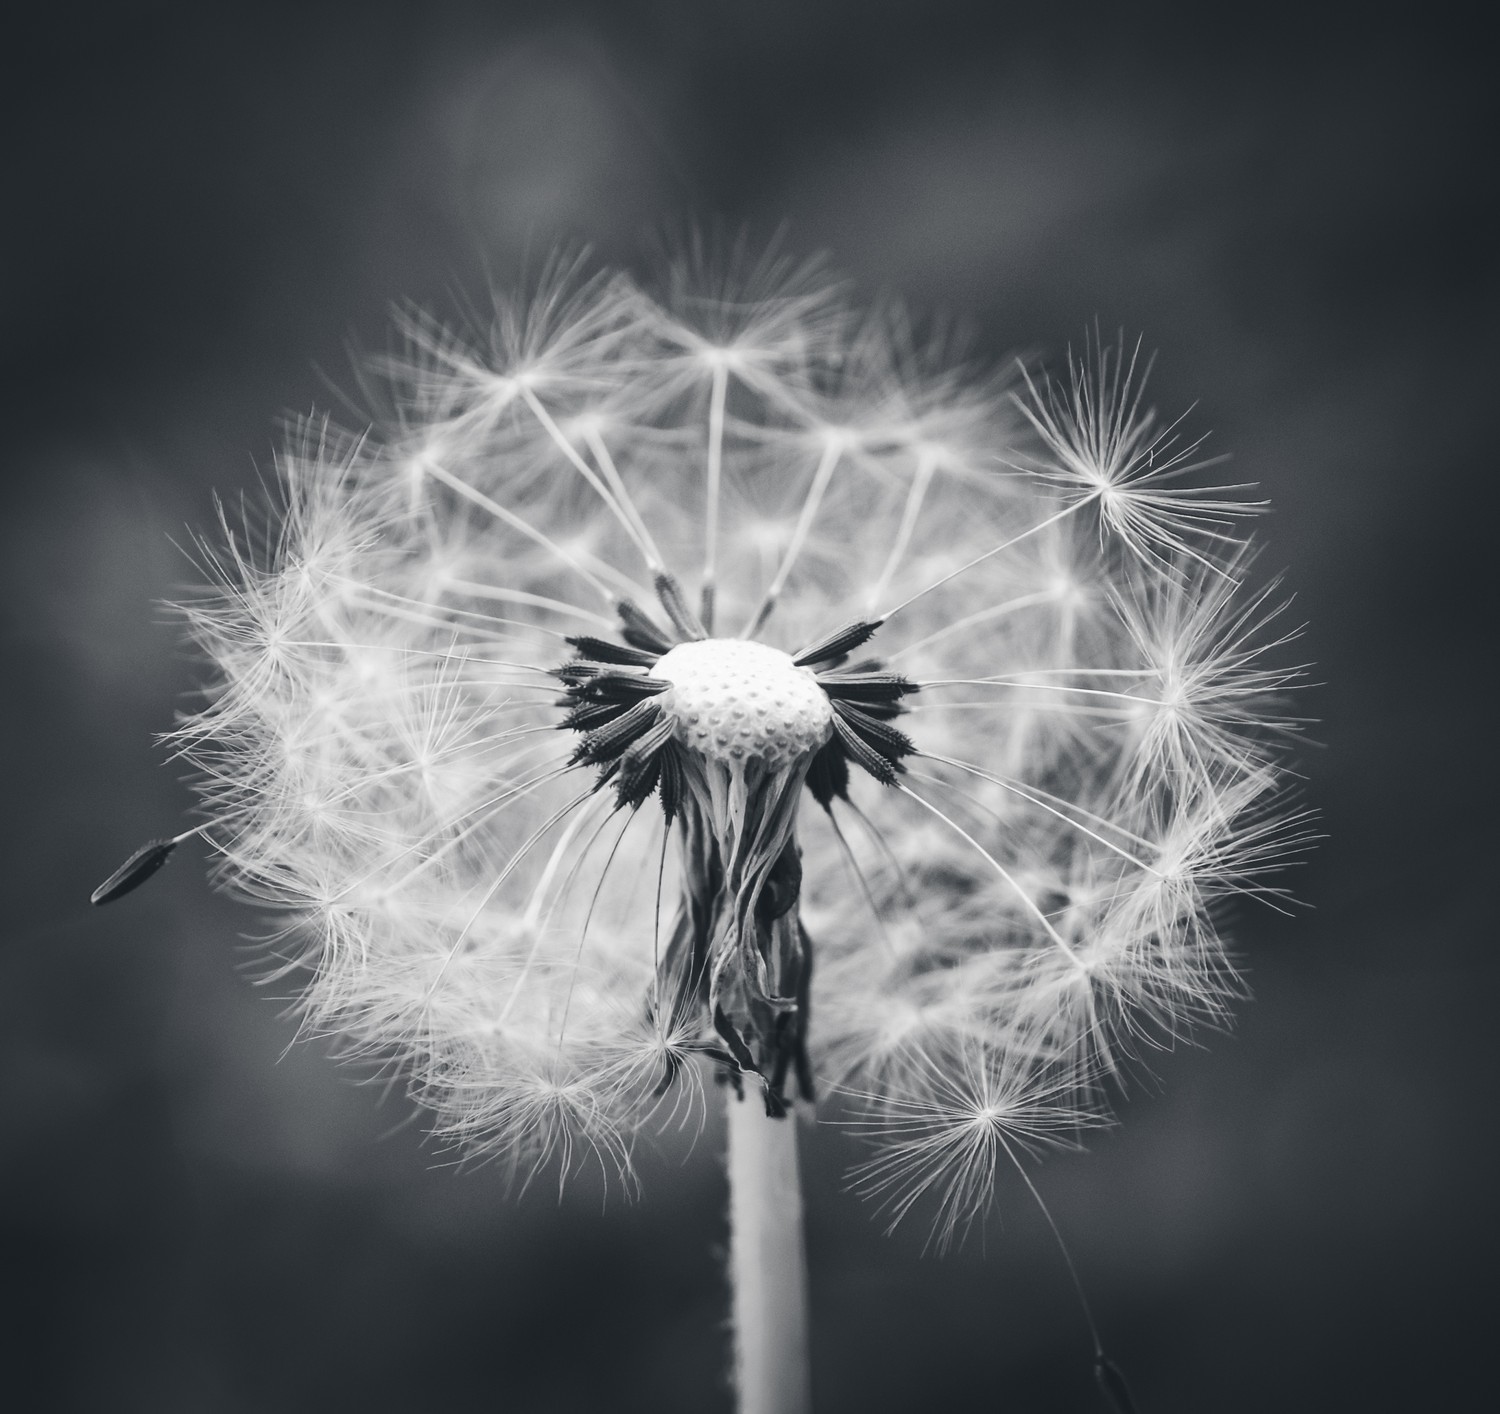 Black & White Dandelion - dandelions... an eternal source of beautiful photographs